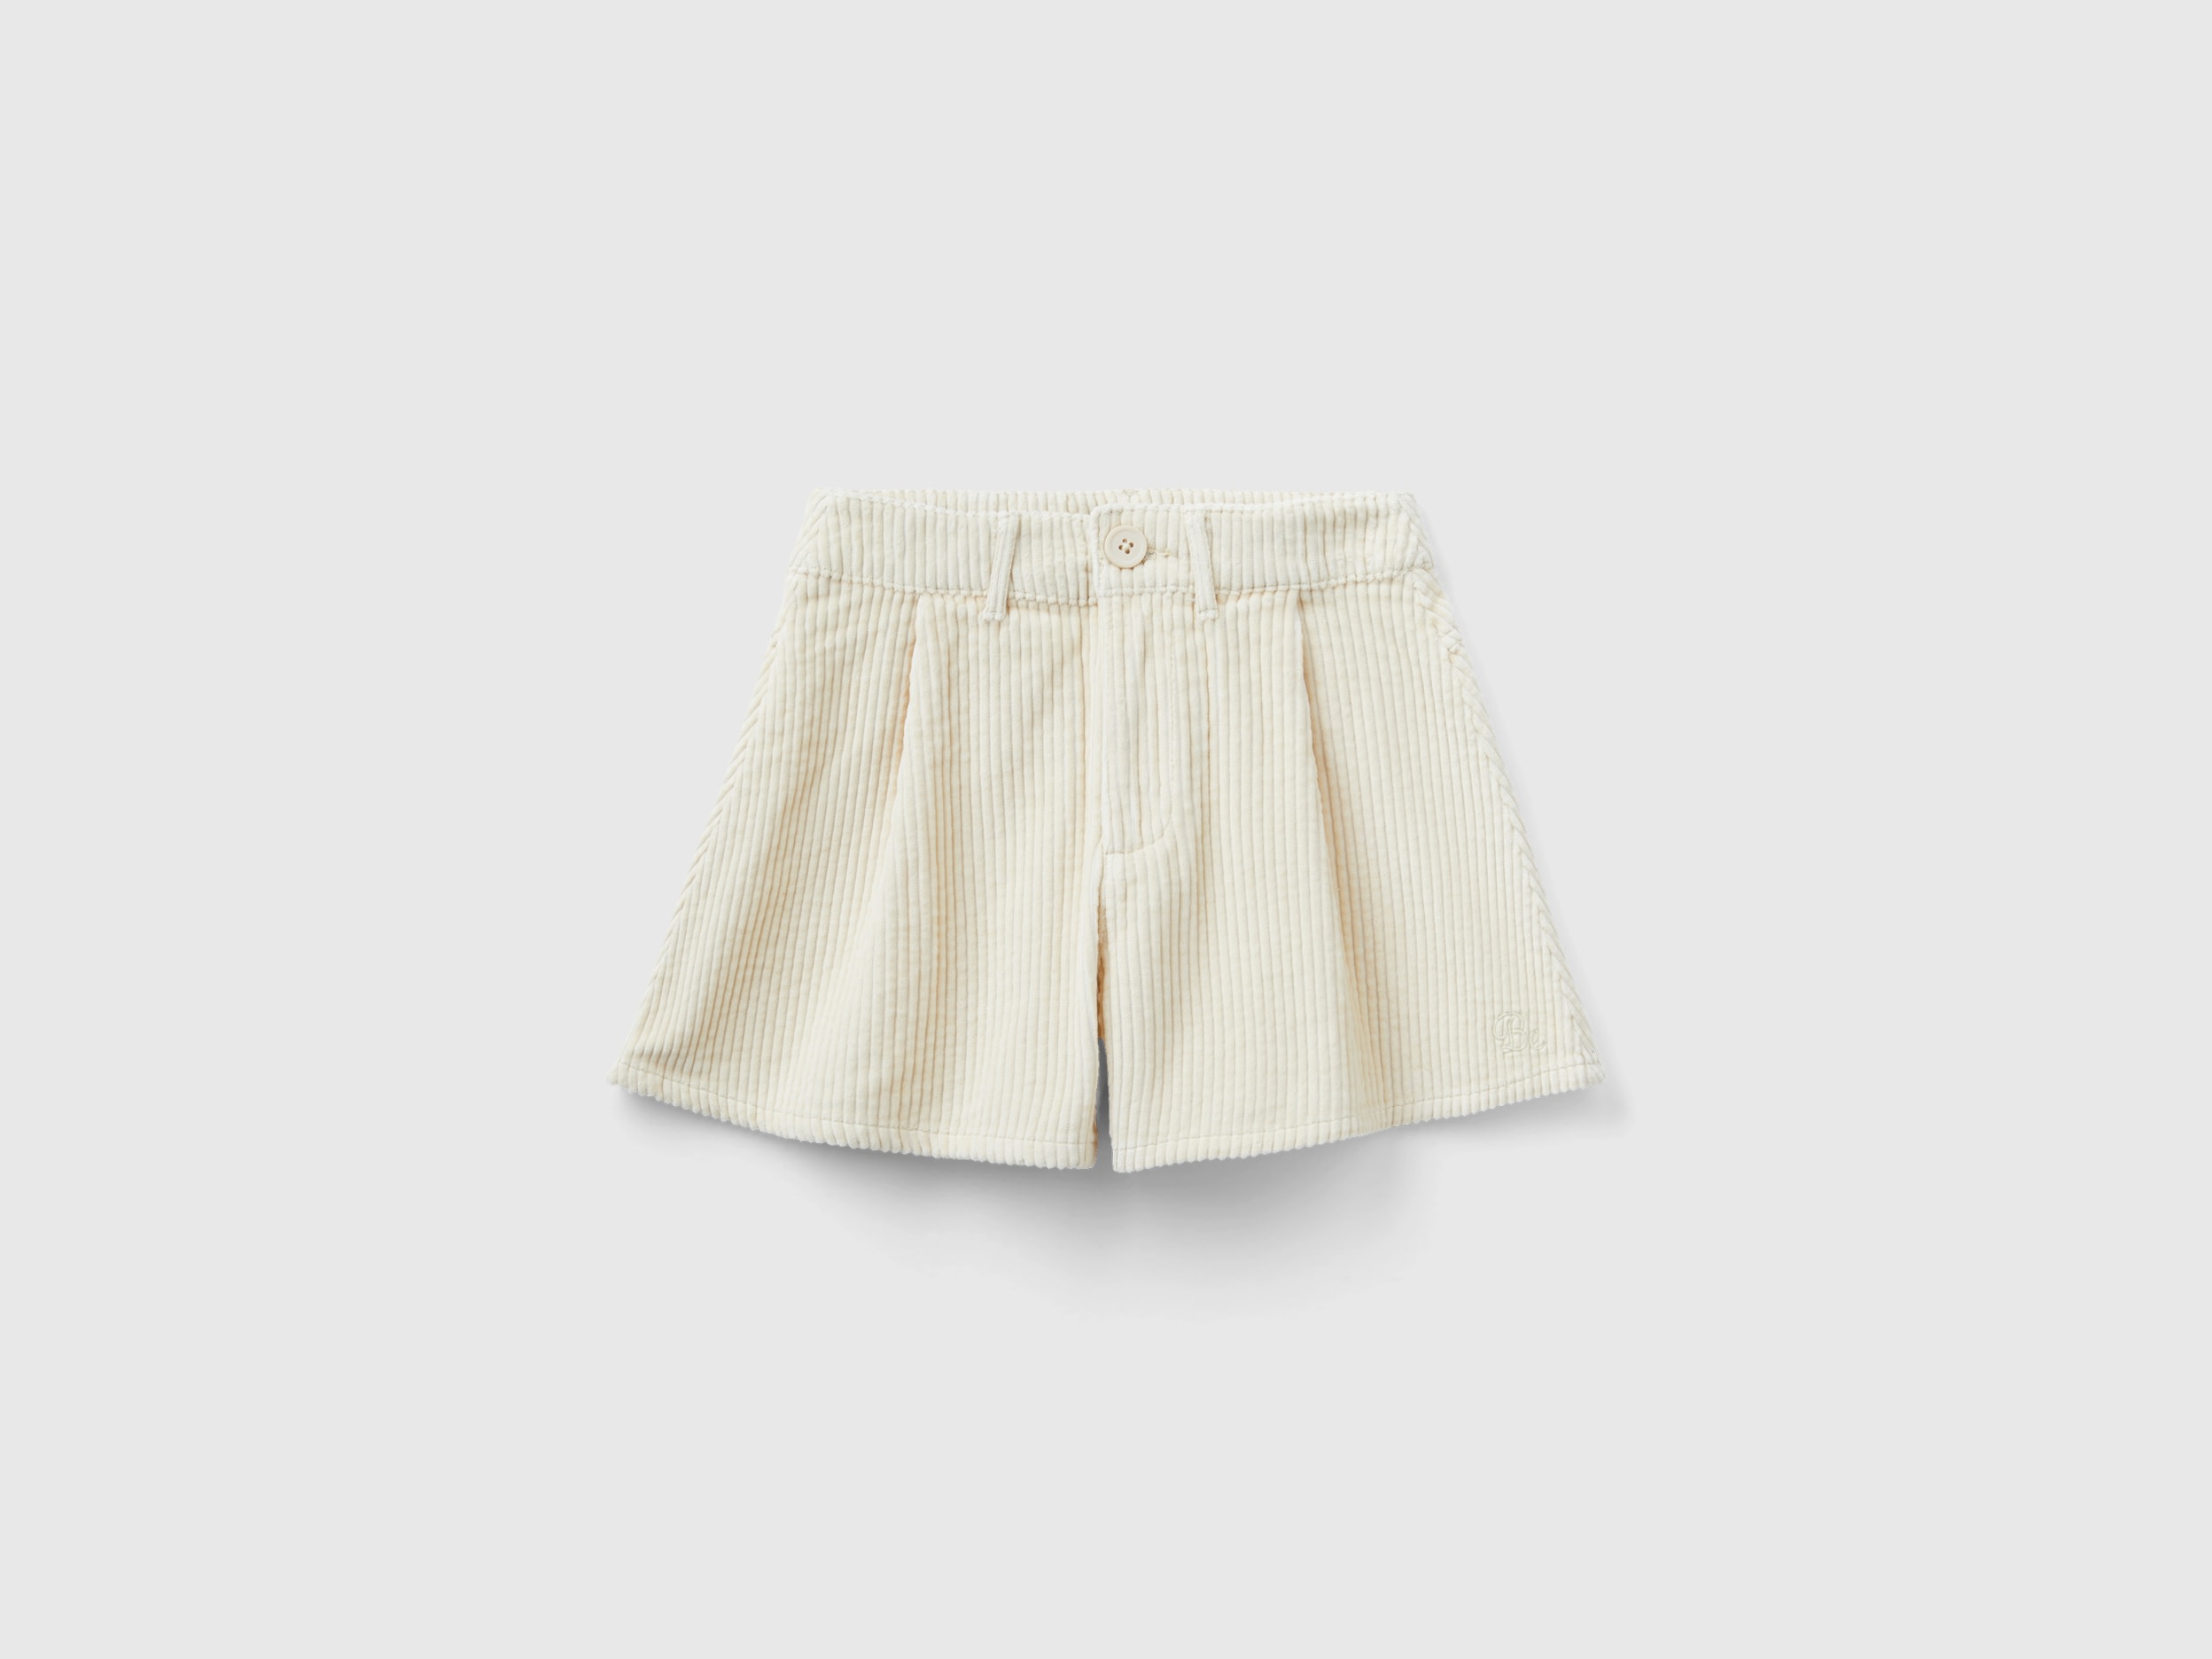 Benetton, Corduroy Bermuda Shorts, size 3XL, Creamy White, Kids